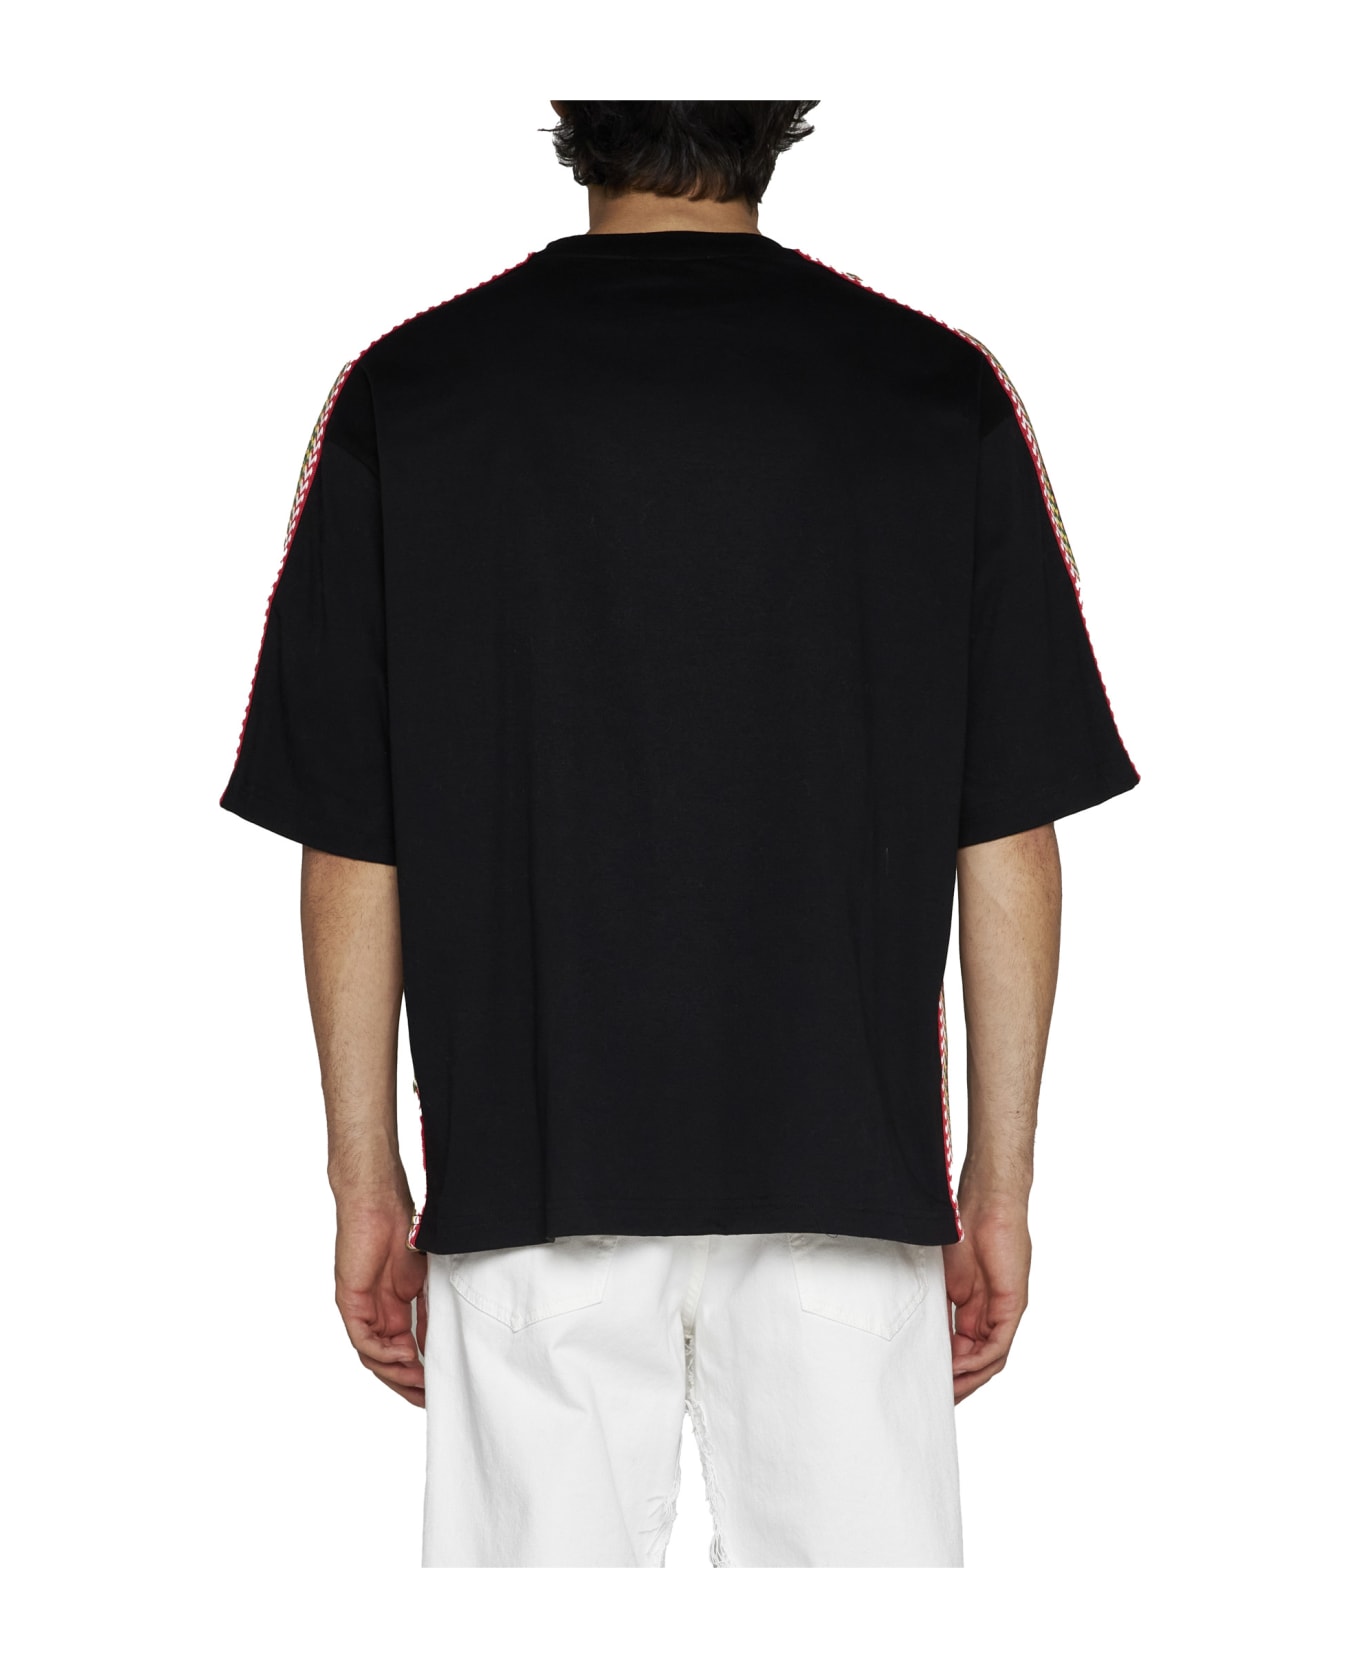 Lanvin T-Shirt - Black シャツ